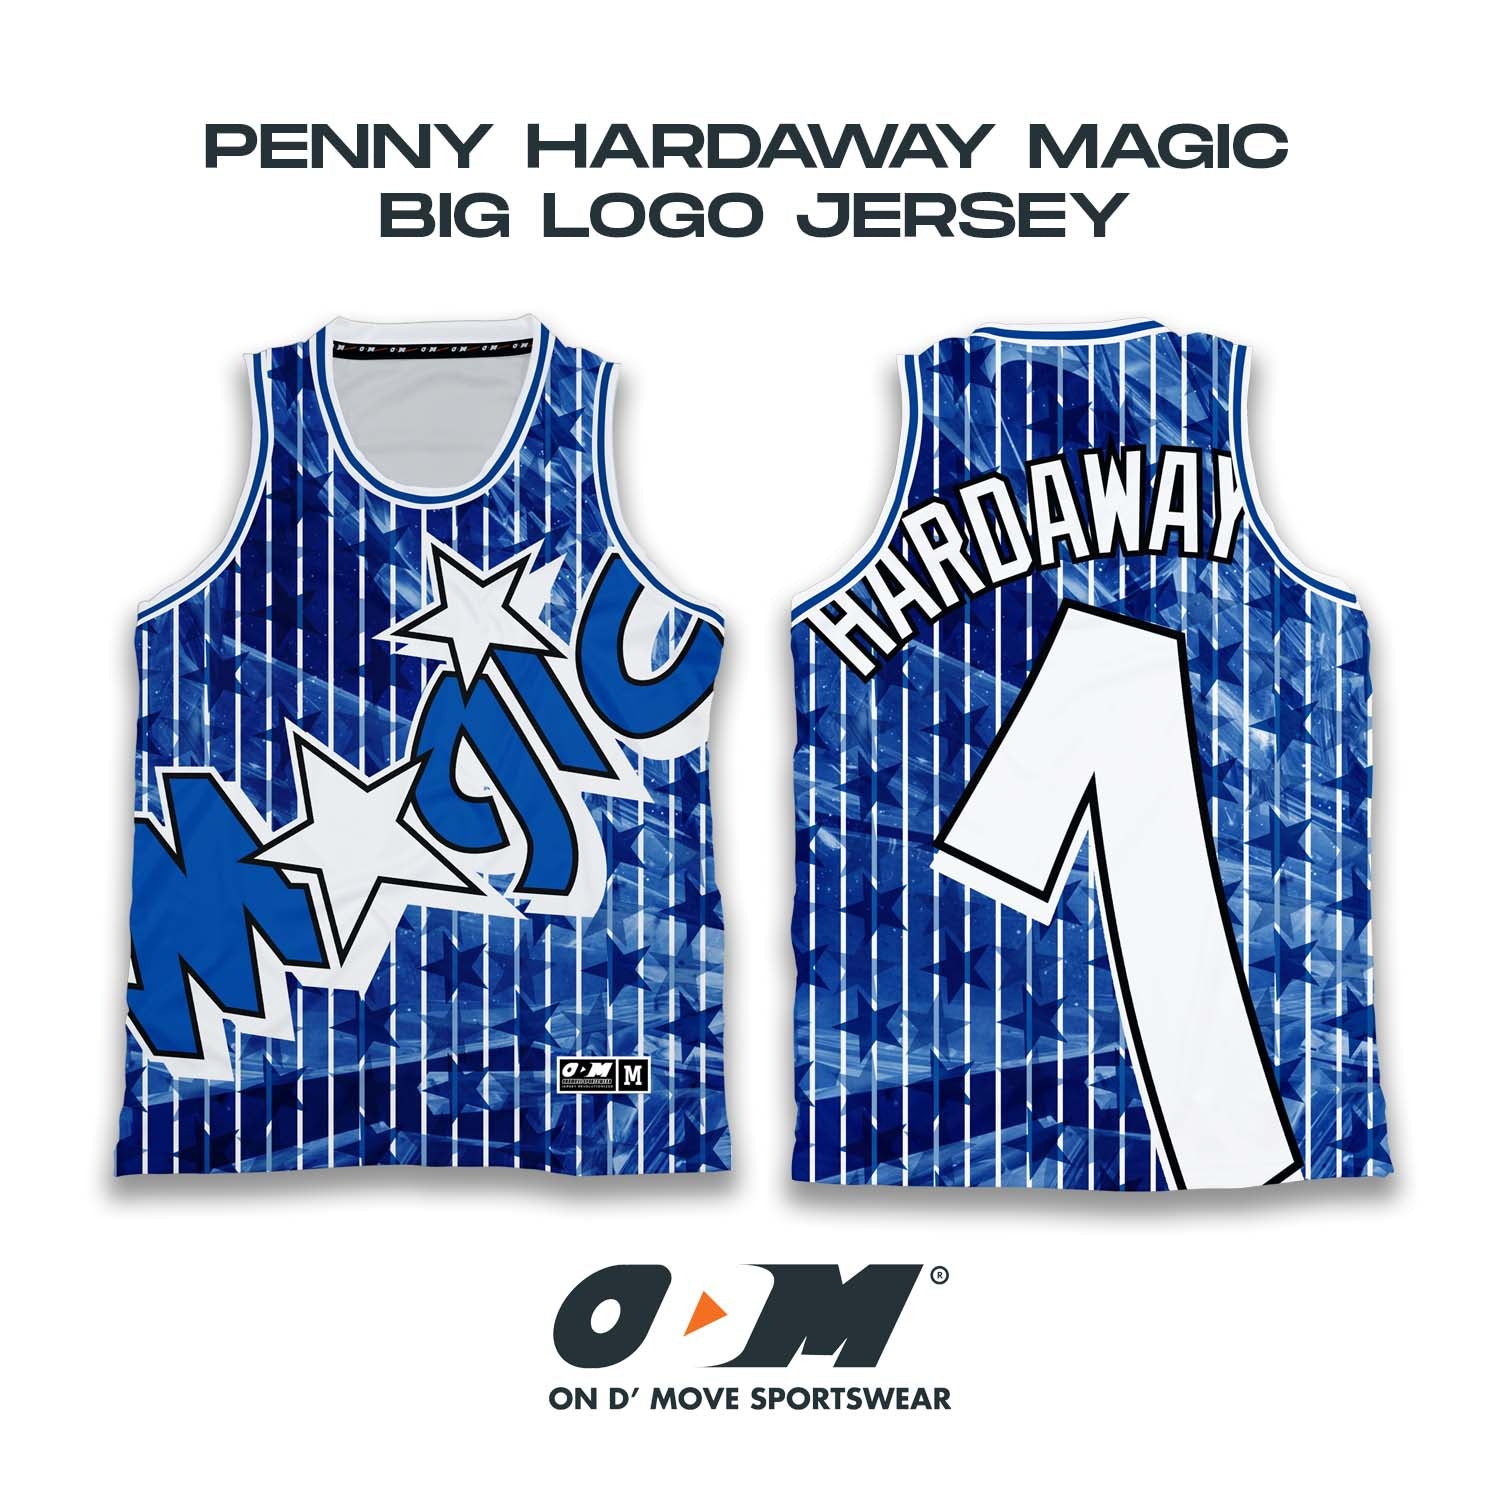 Penny Hardaway Magic Big Logo Jersey